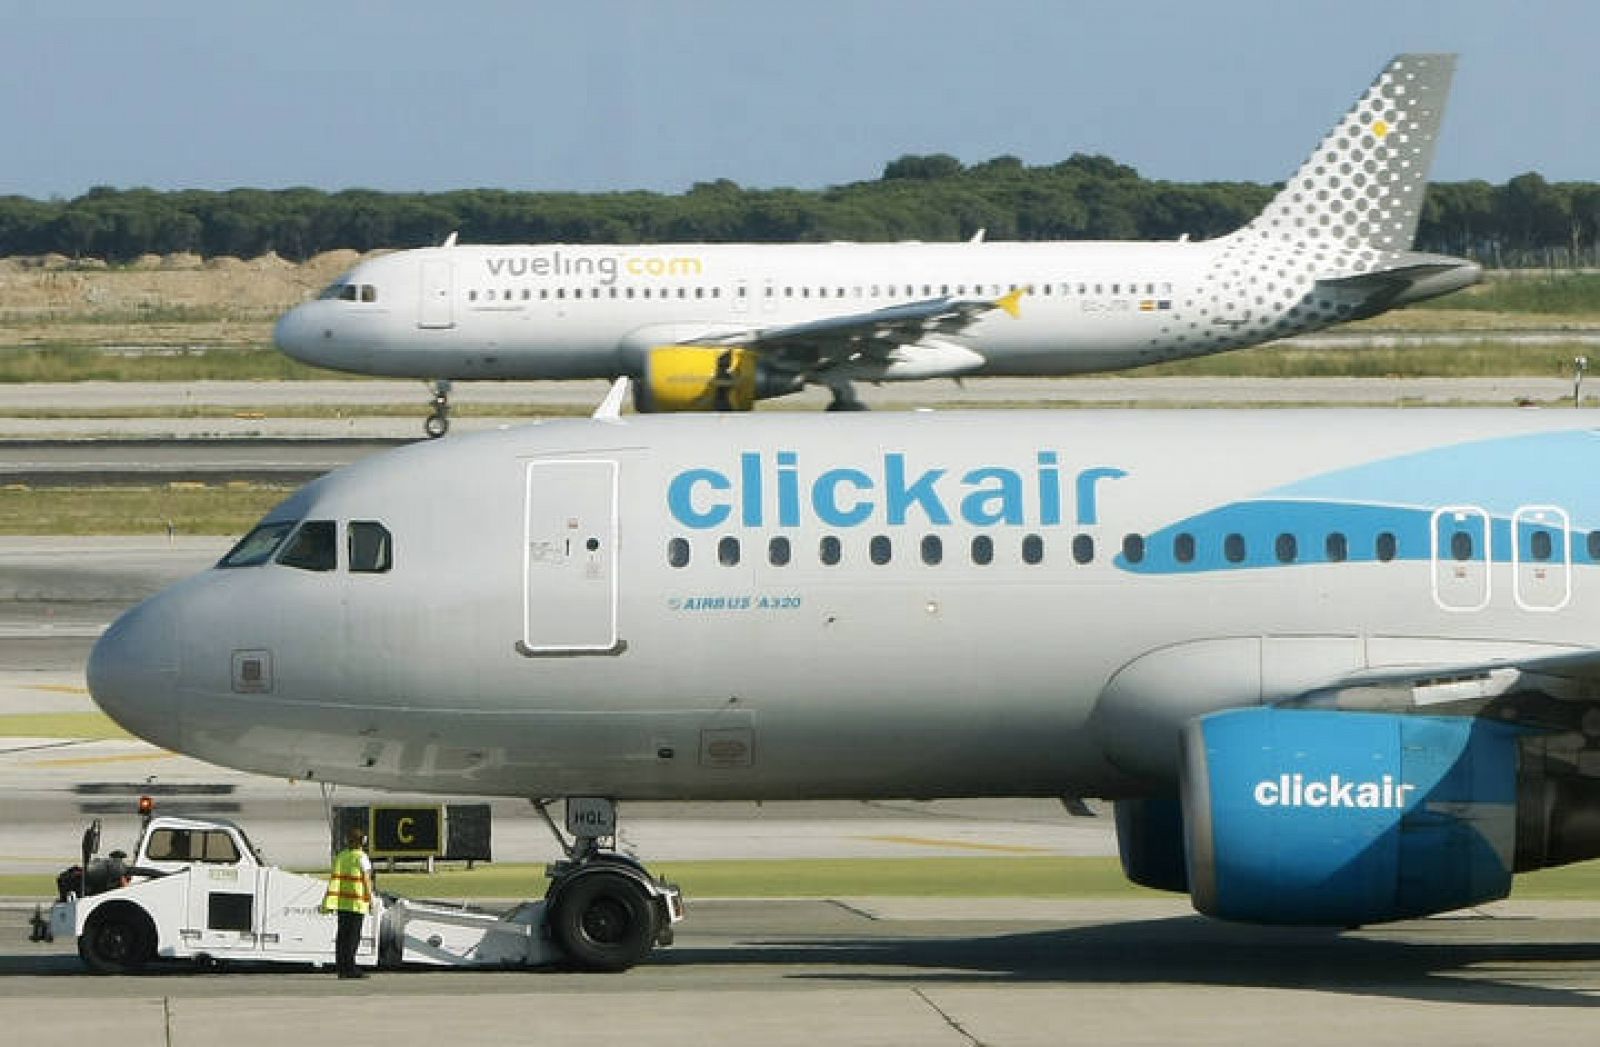 Clickair and Vueling planes are seen at El Prat airpot in Barcelona